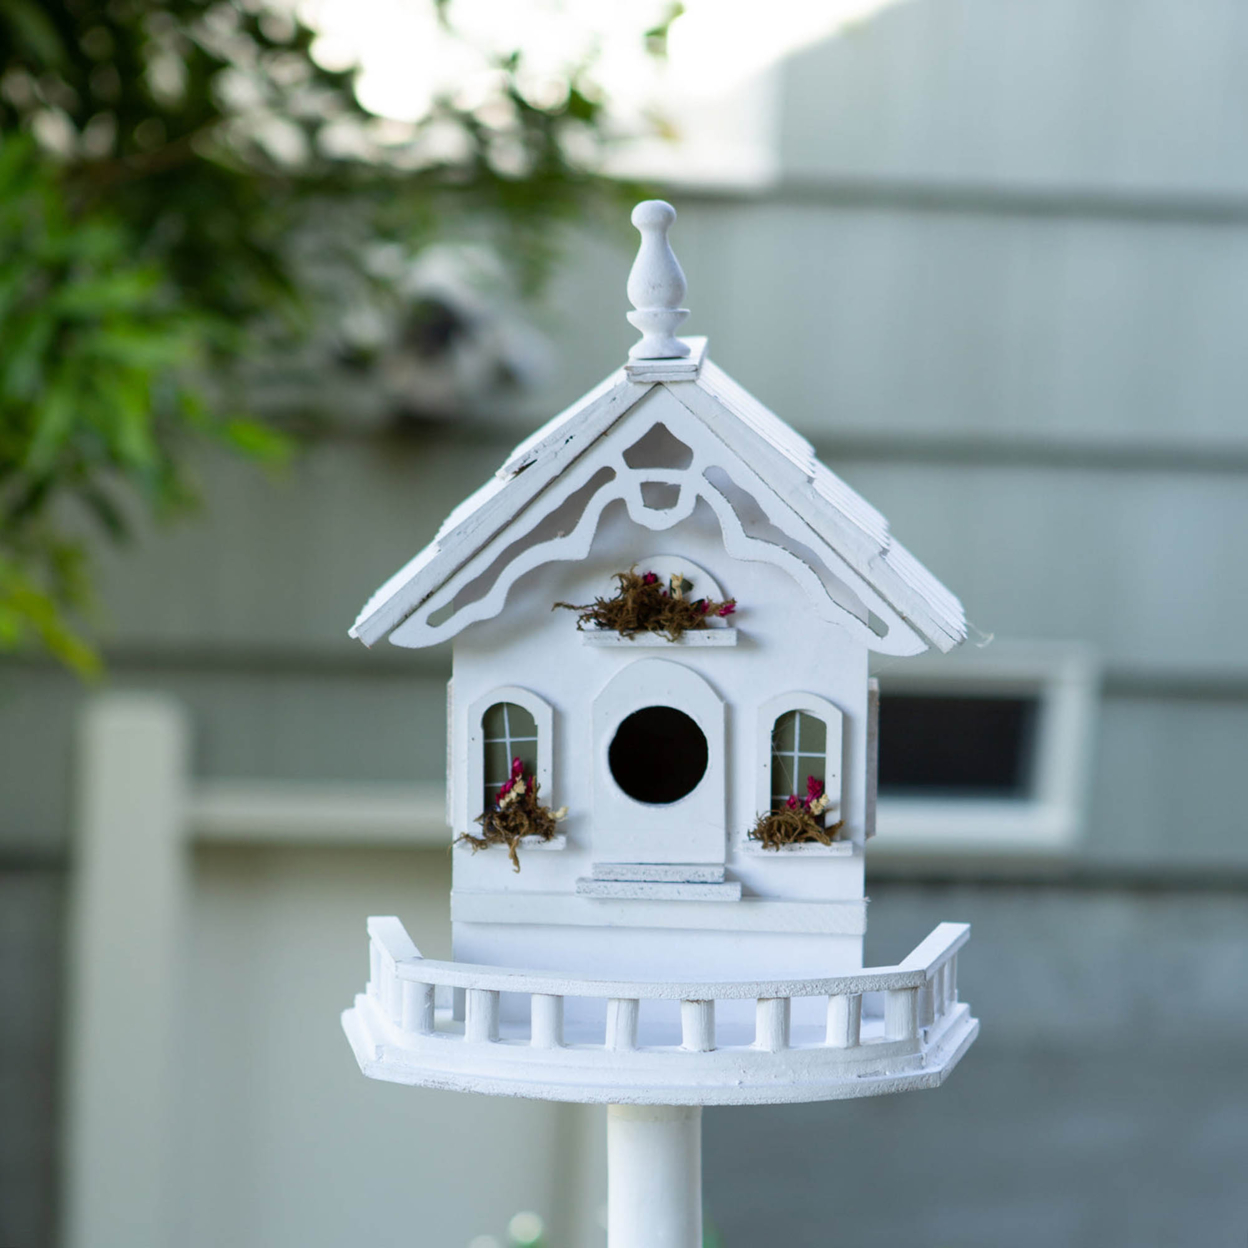 Home Decorative Victorian Pedestal Bird House - White - image 4 of 6